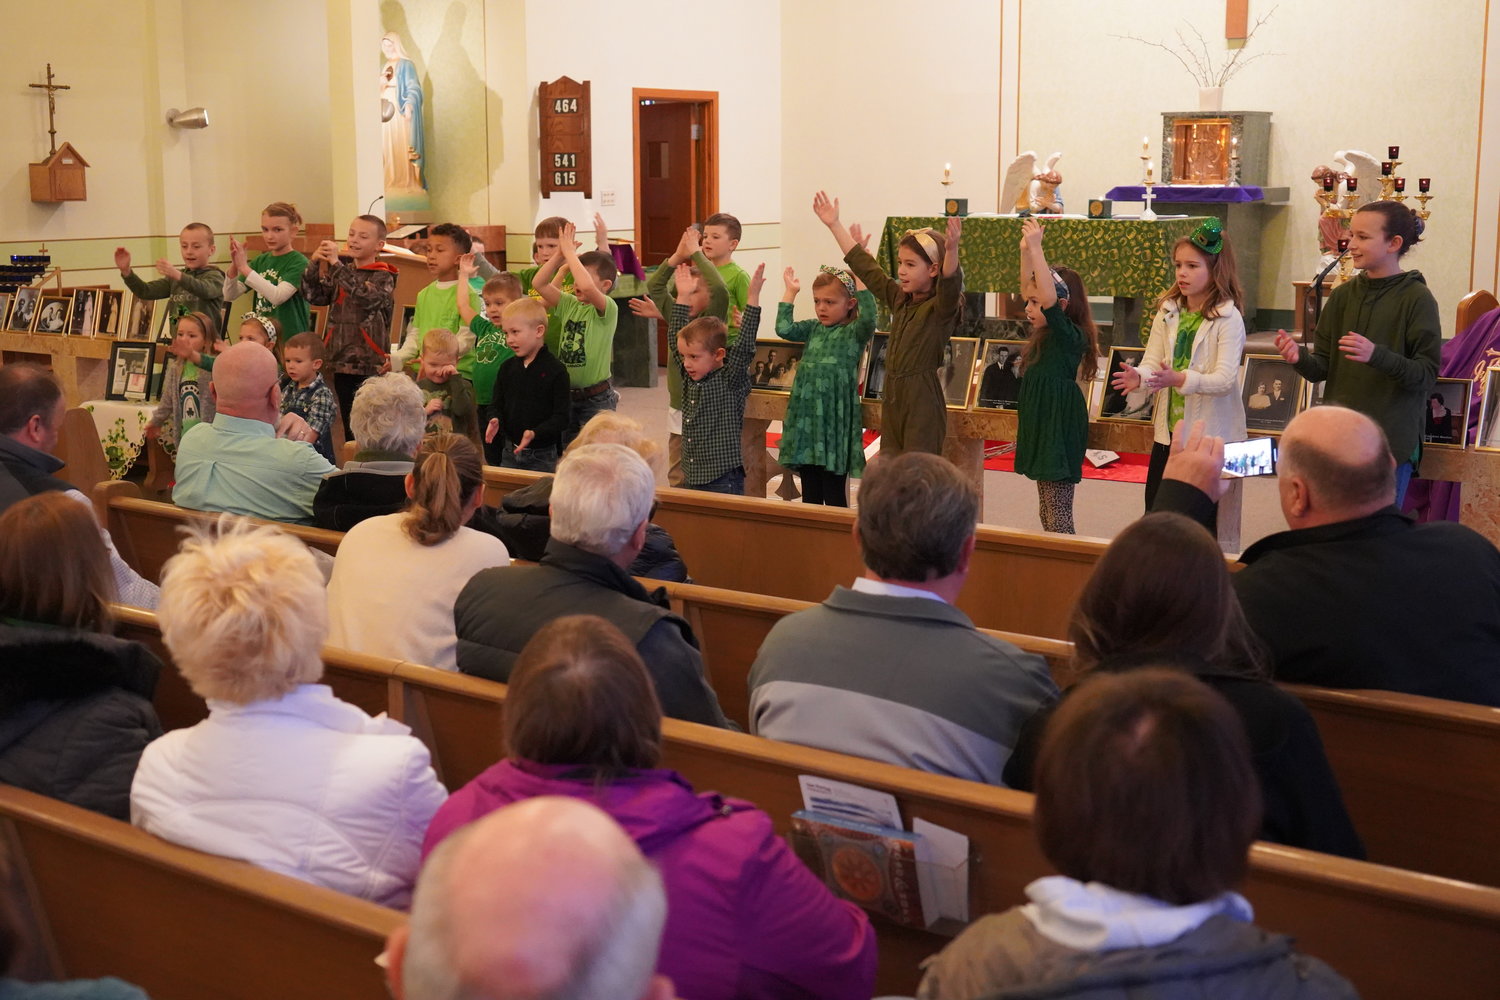 Children of the parish sing an Irish Lullaby after Mass.